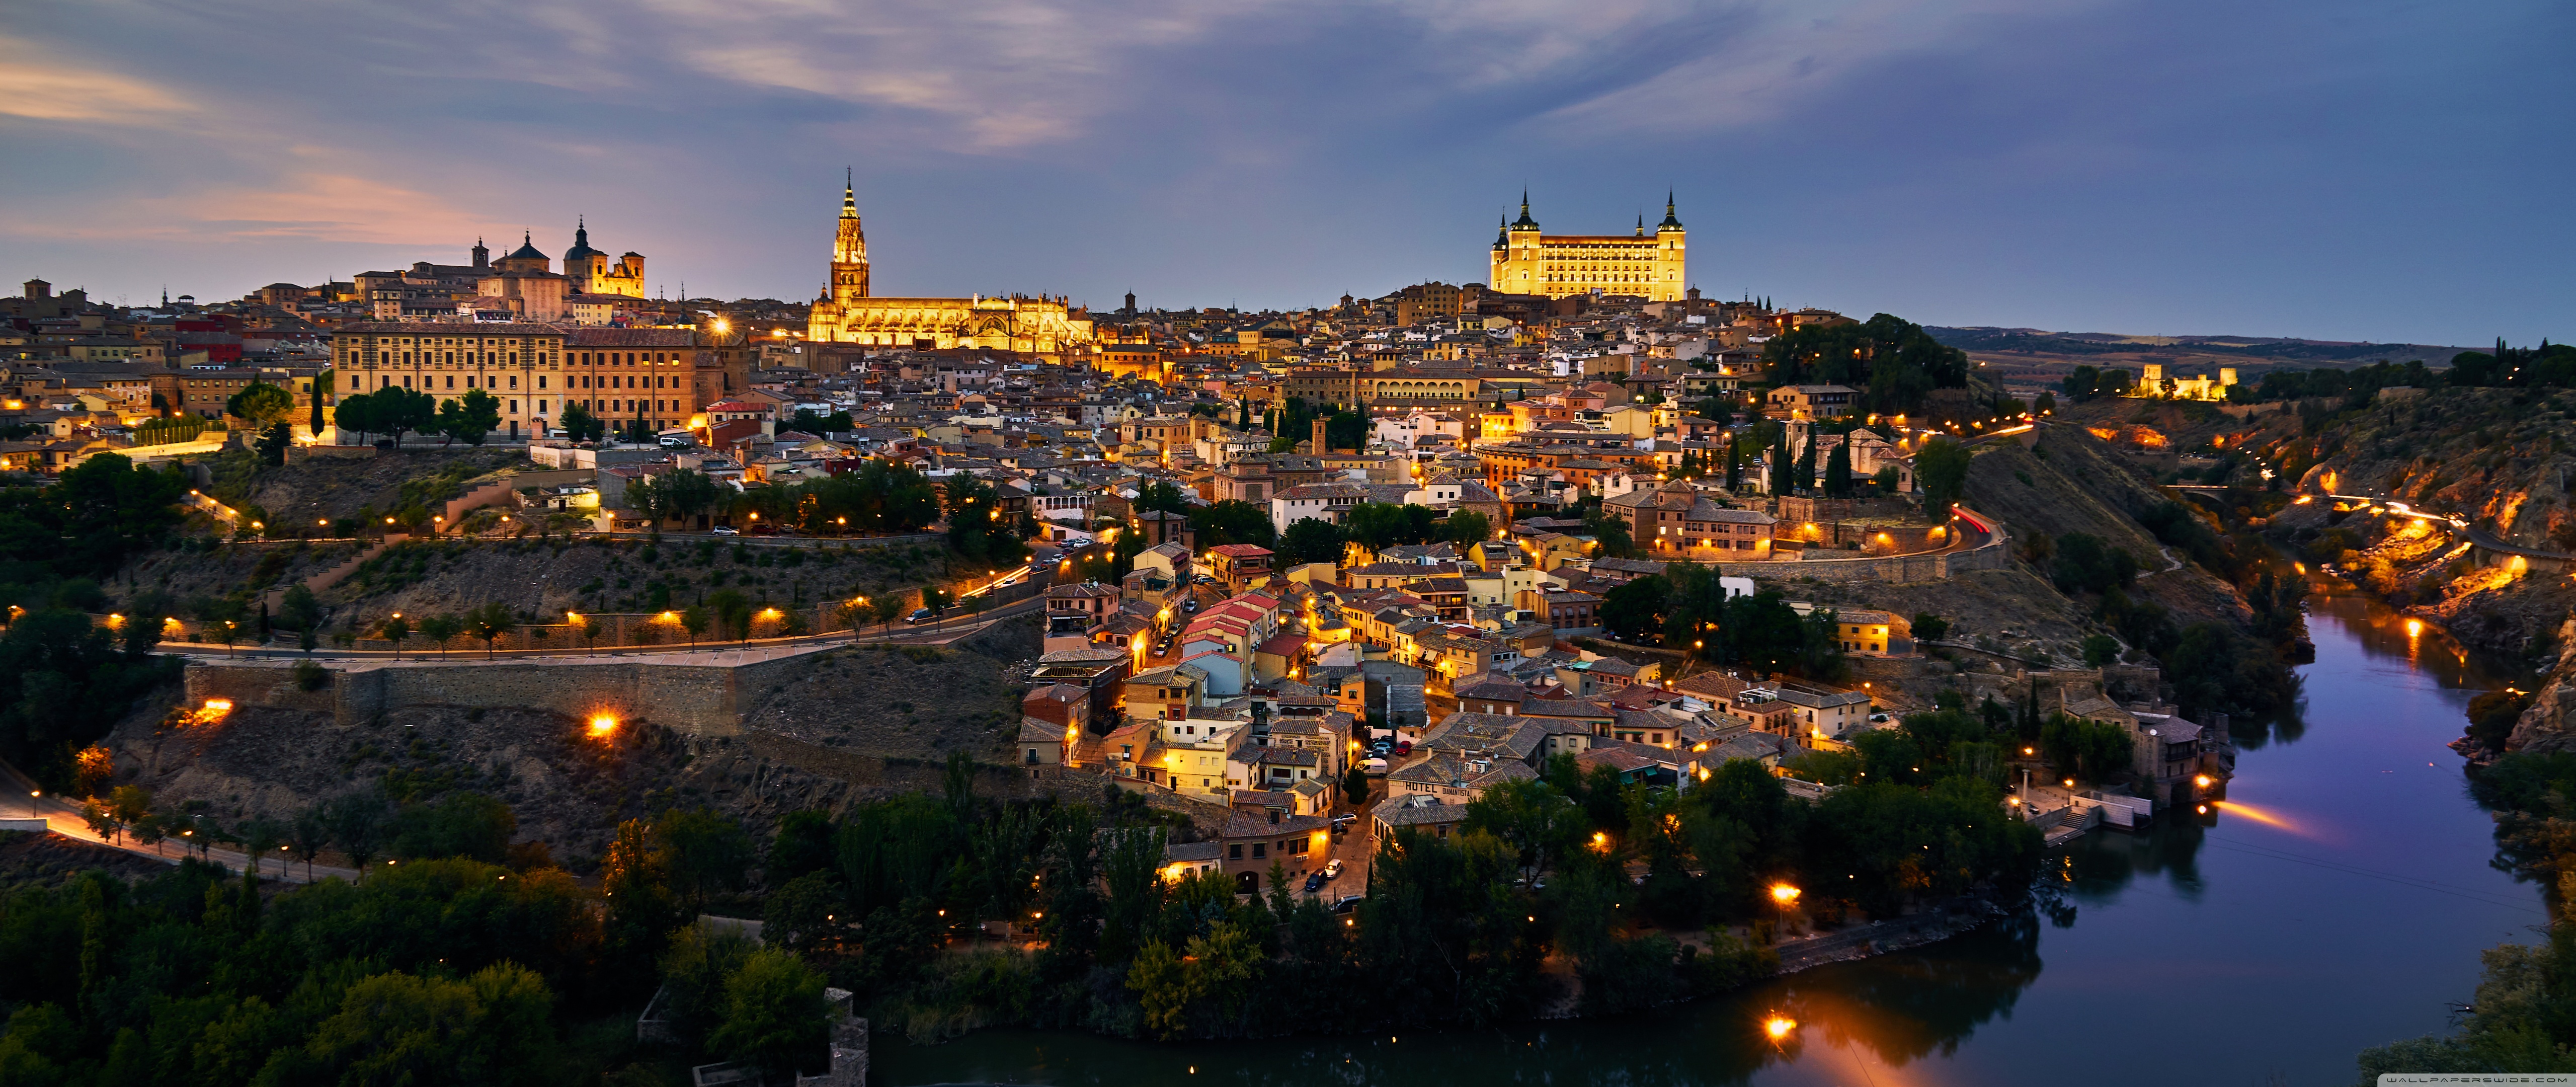 Historic City Of Toledo Spain 4k HD Desktop Wallpaper For